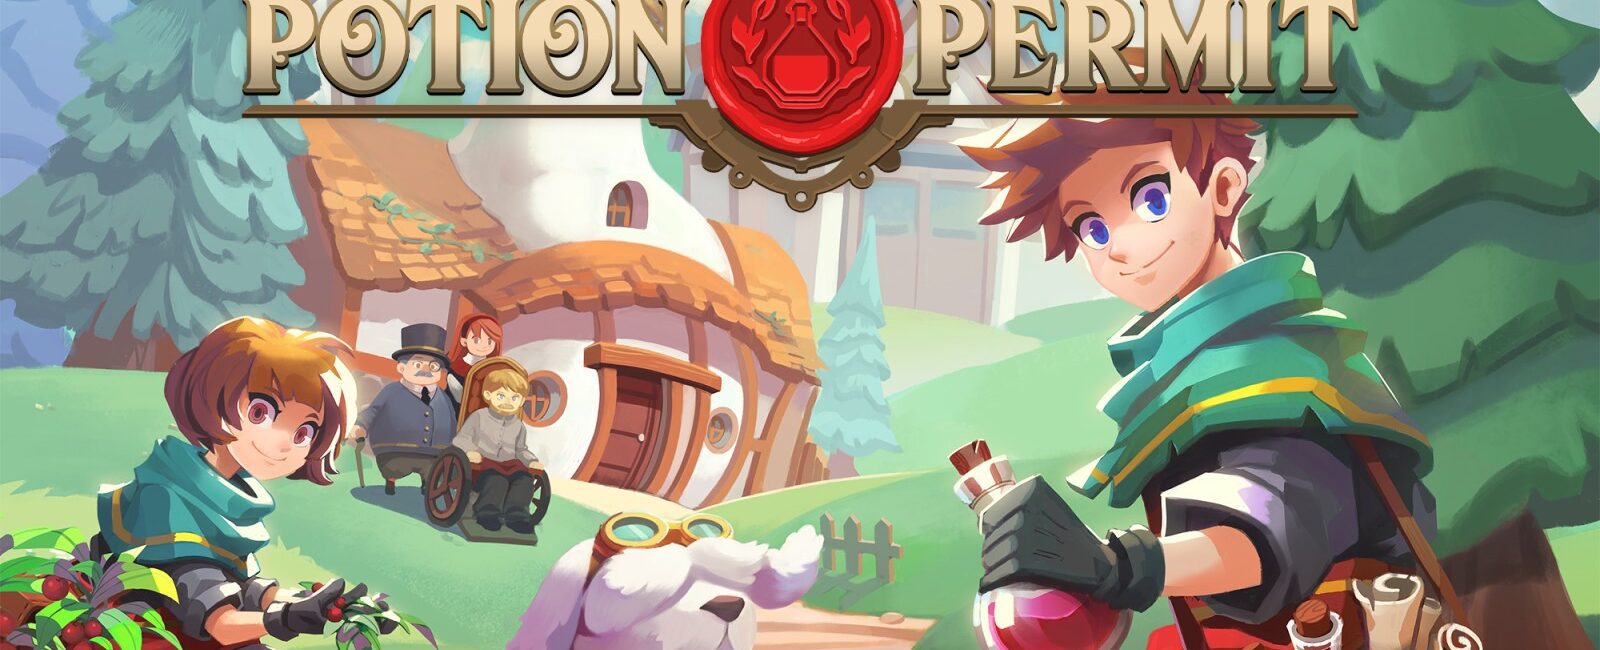 Potion Permit Nintendo Switch game header